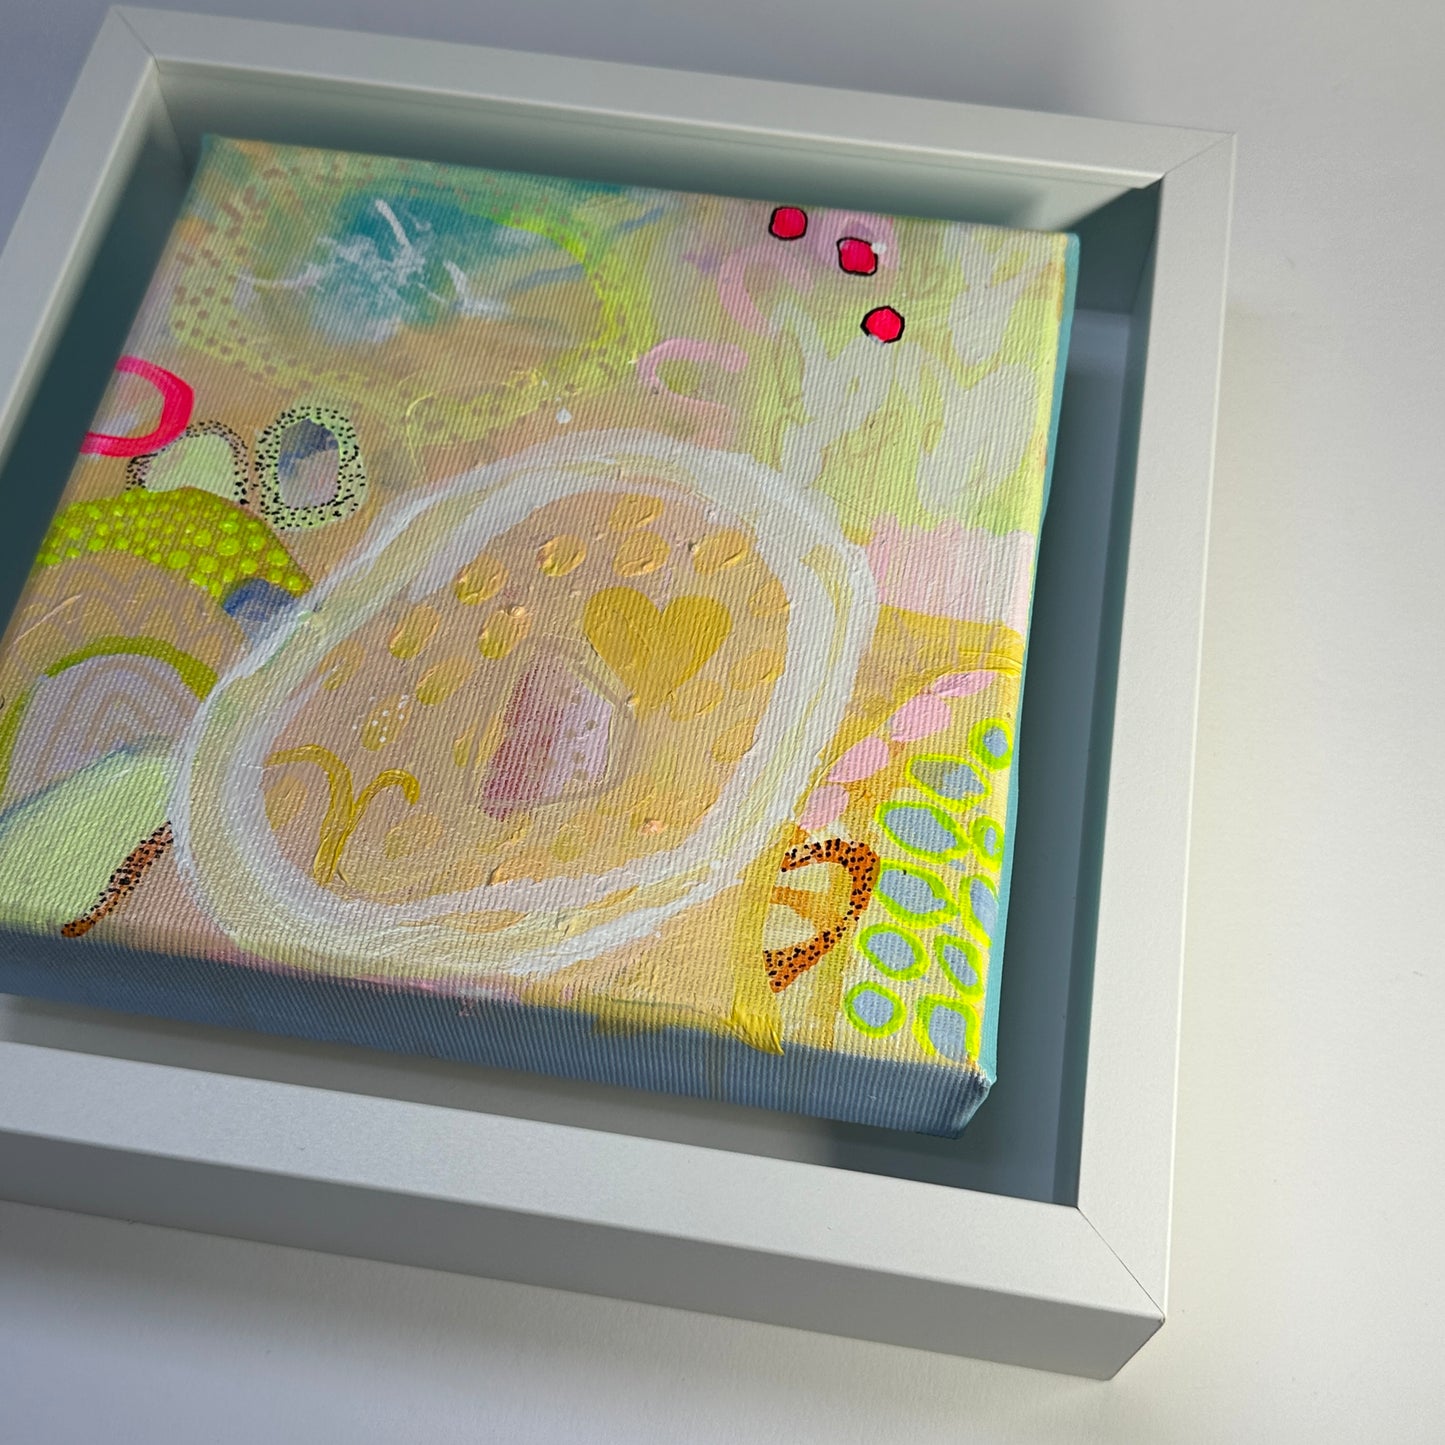 Framed “FRUIT SALAD” Acrylic Painting